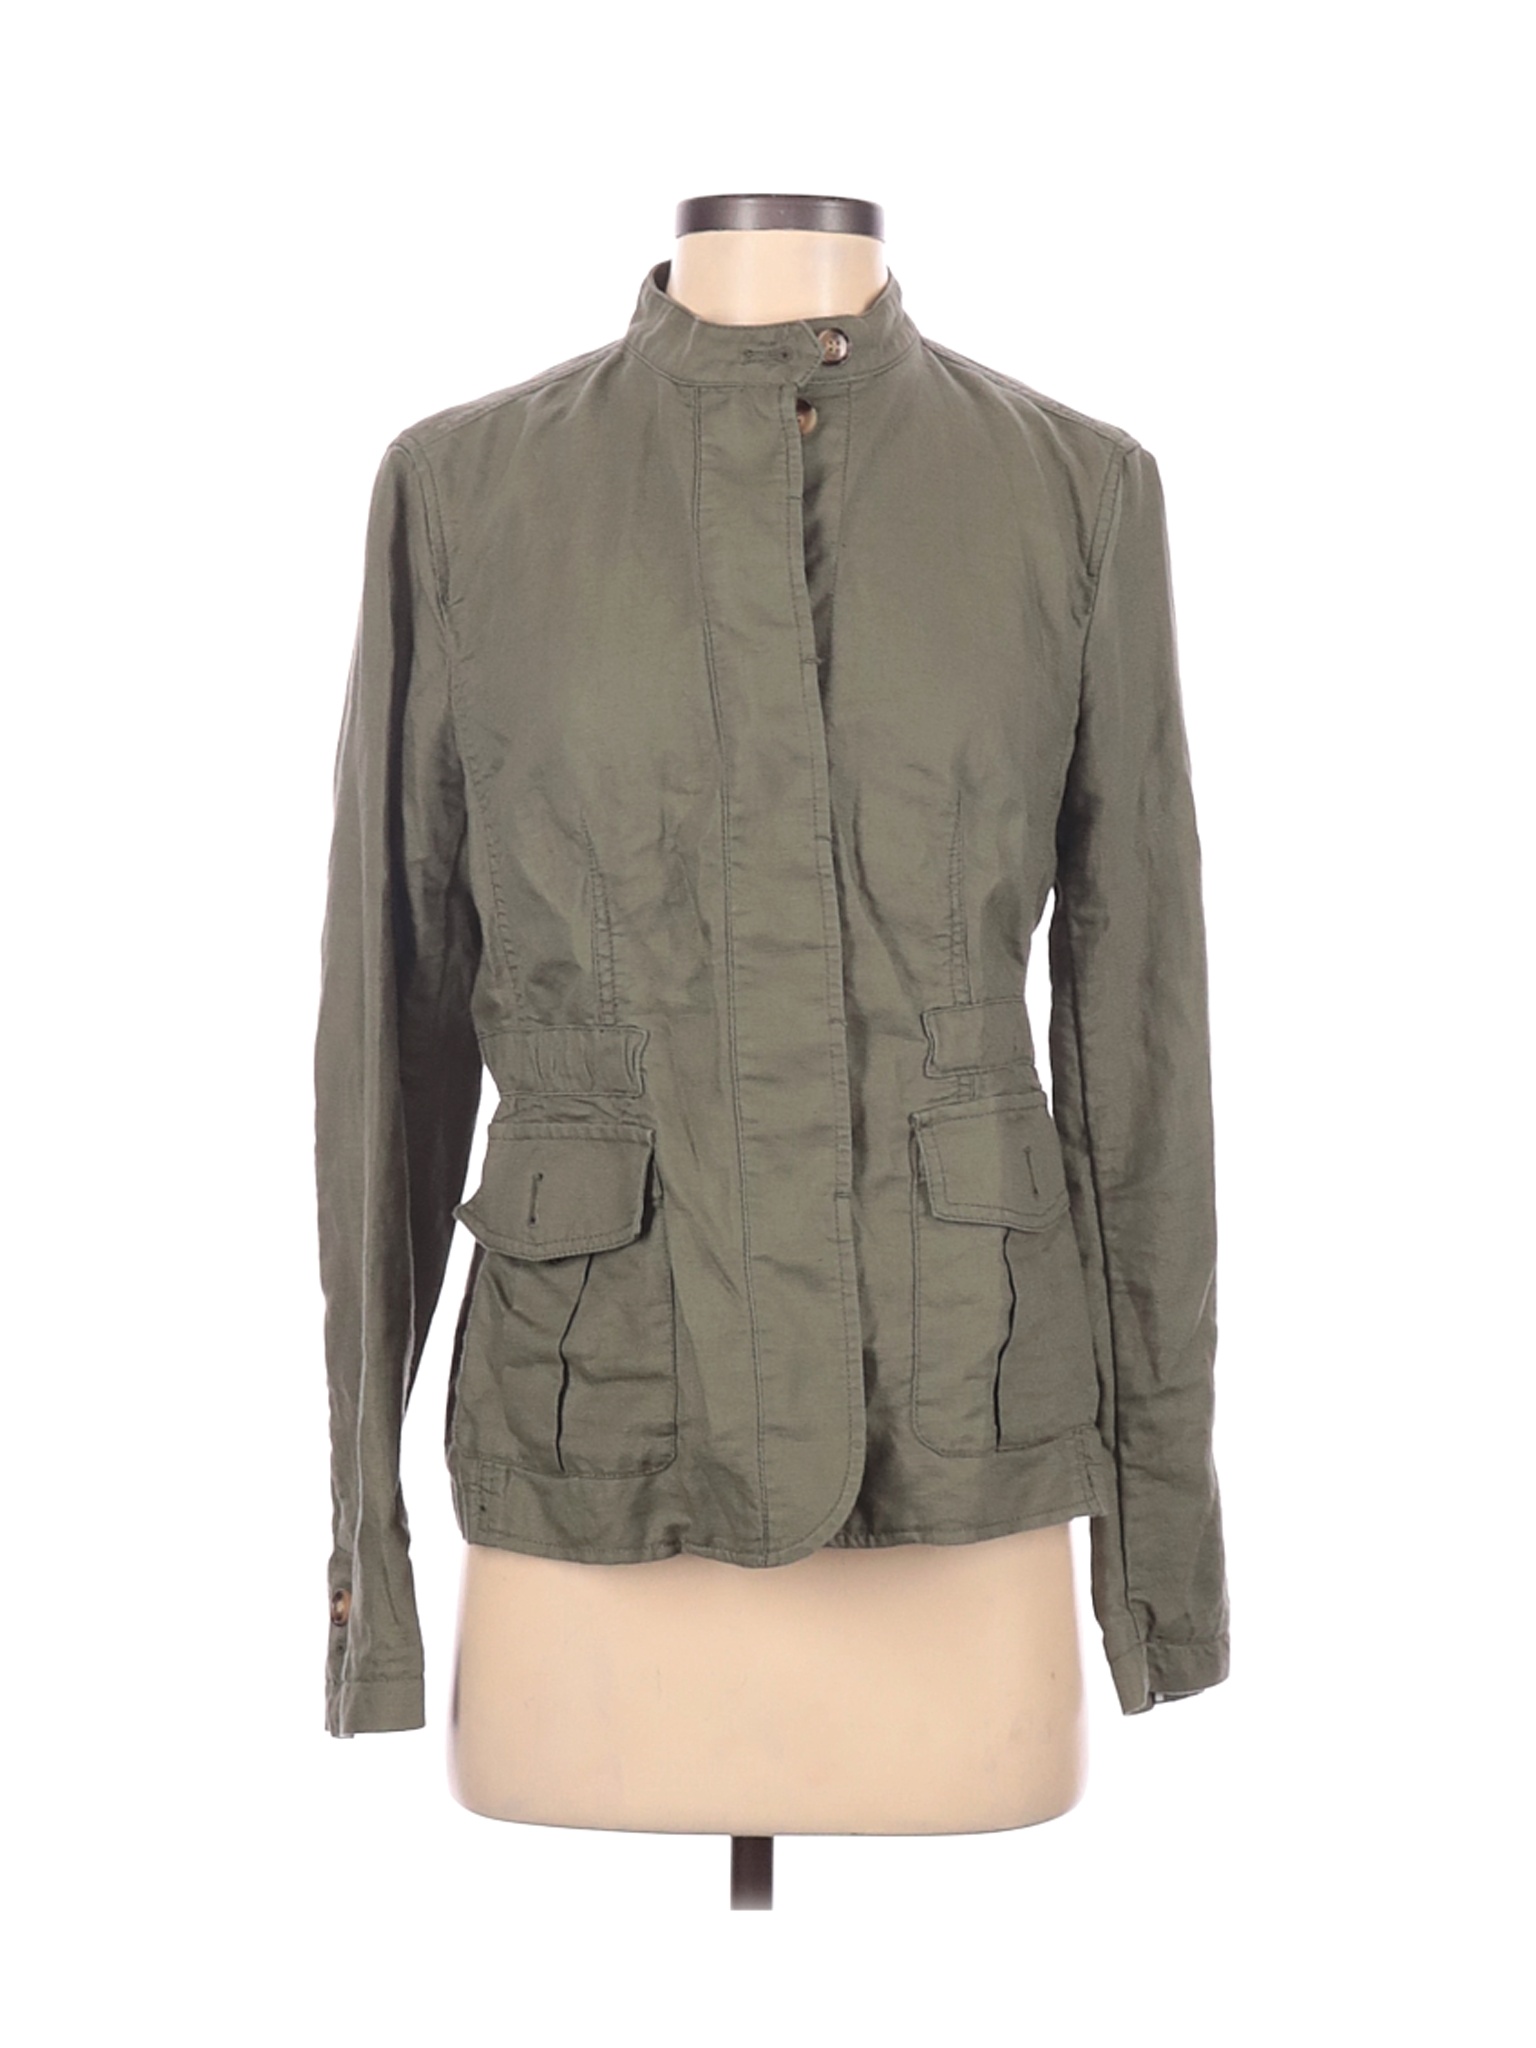 Talbots Women Green Jacket S | eBay